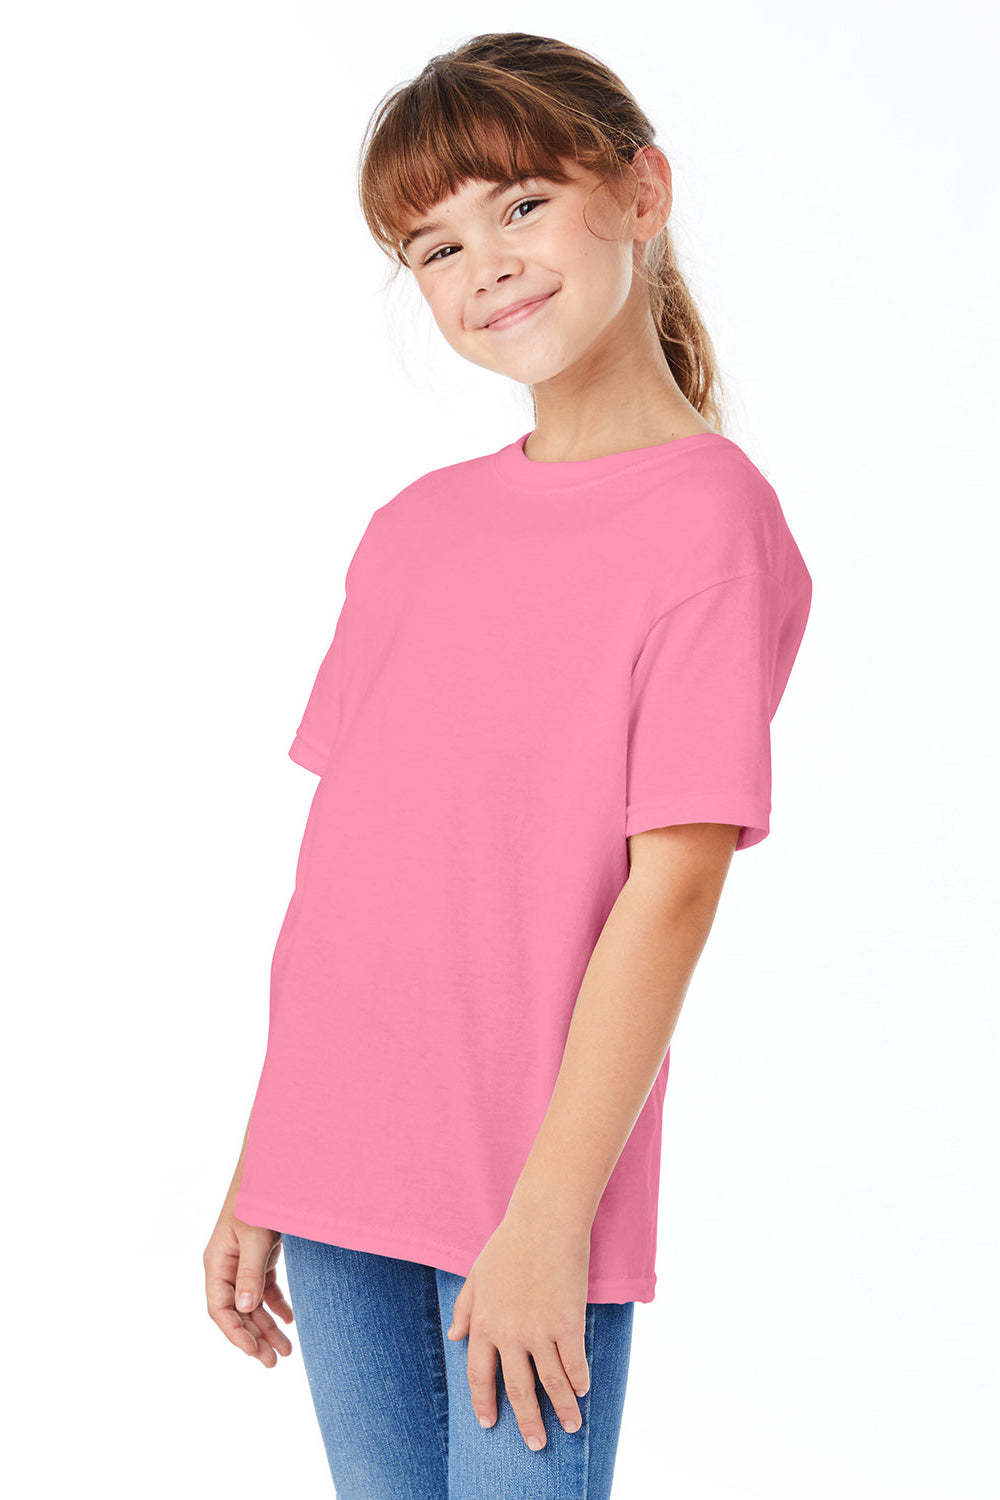 Hanes 5480 Youth ComfortSoft Short Sleeve Crewneck T-Shirt Safety Pink 3Q